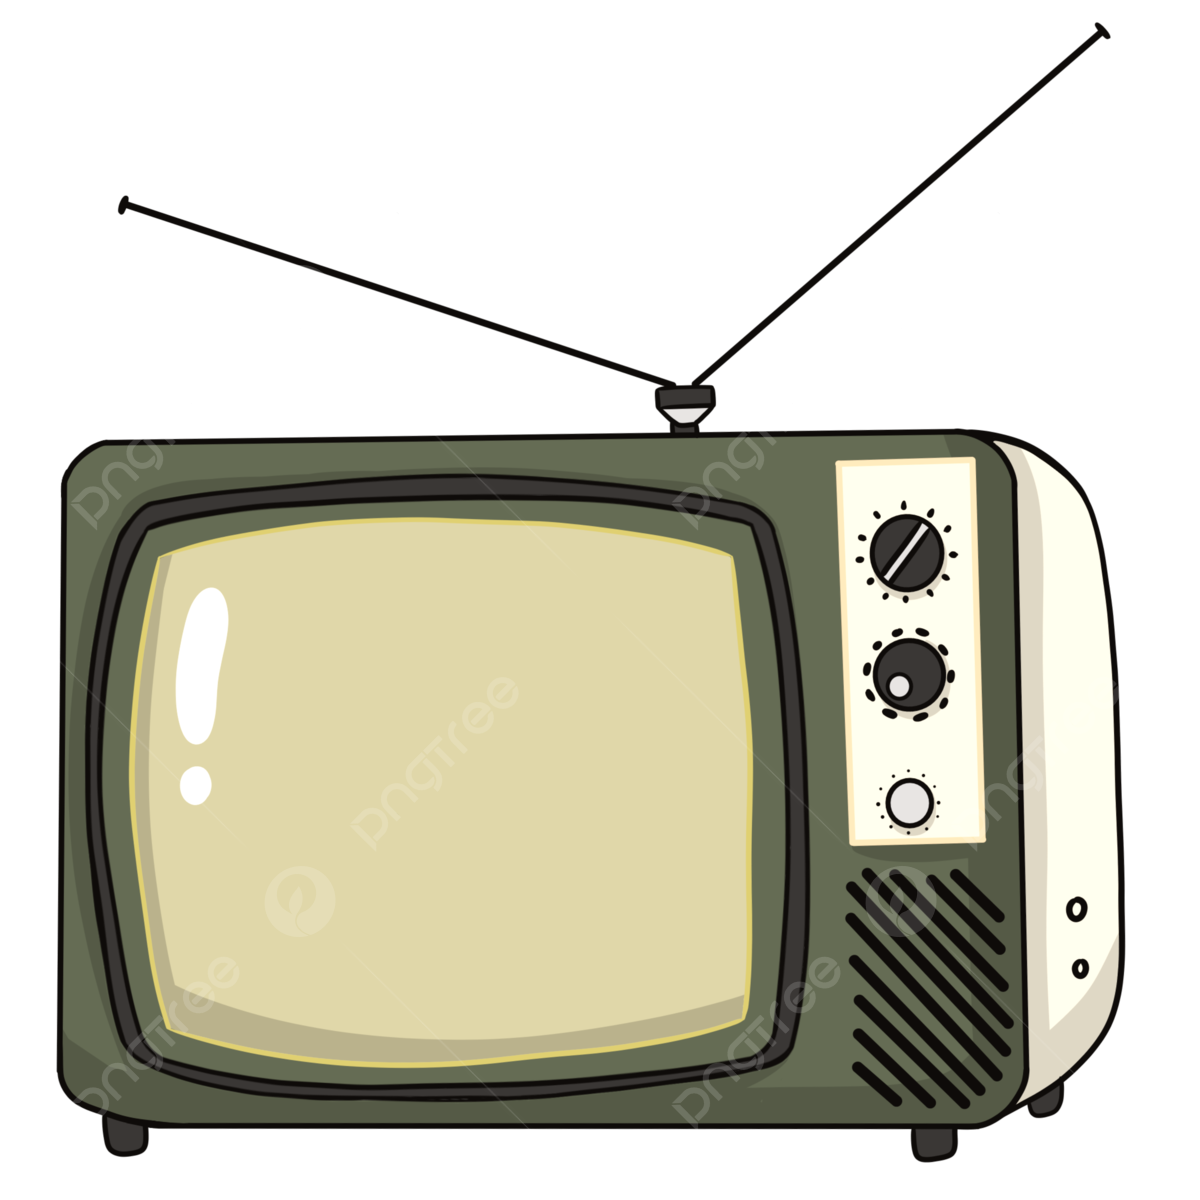 Old Tv PNG Image File